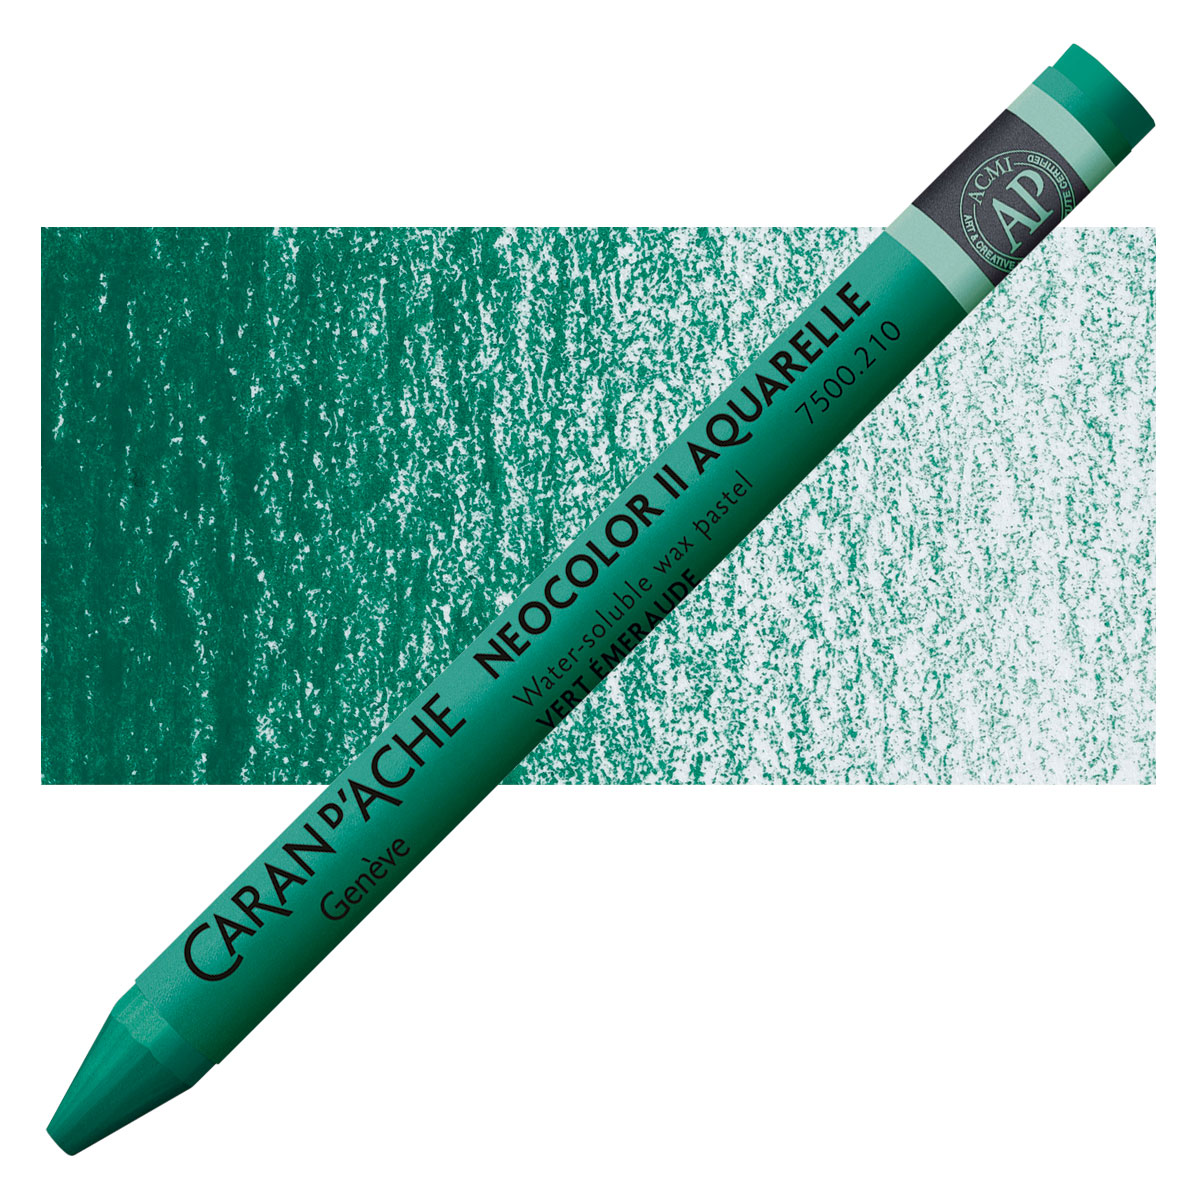 A Quick Review of Caran D'Ache Neocolor II Wax Crayons